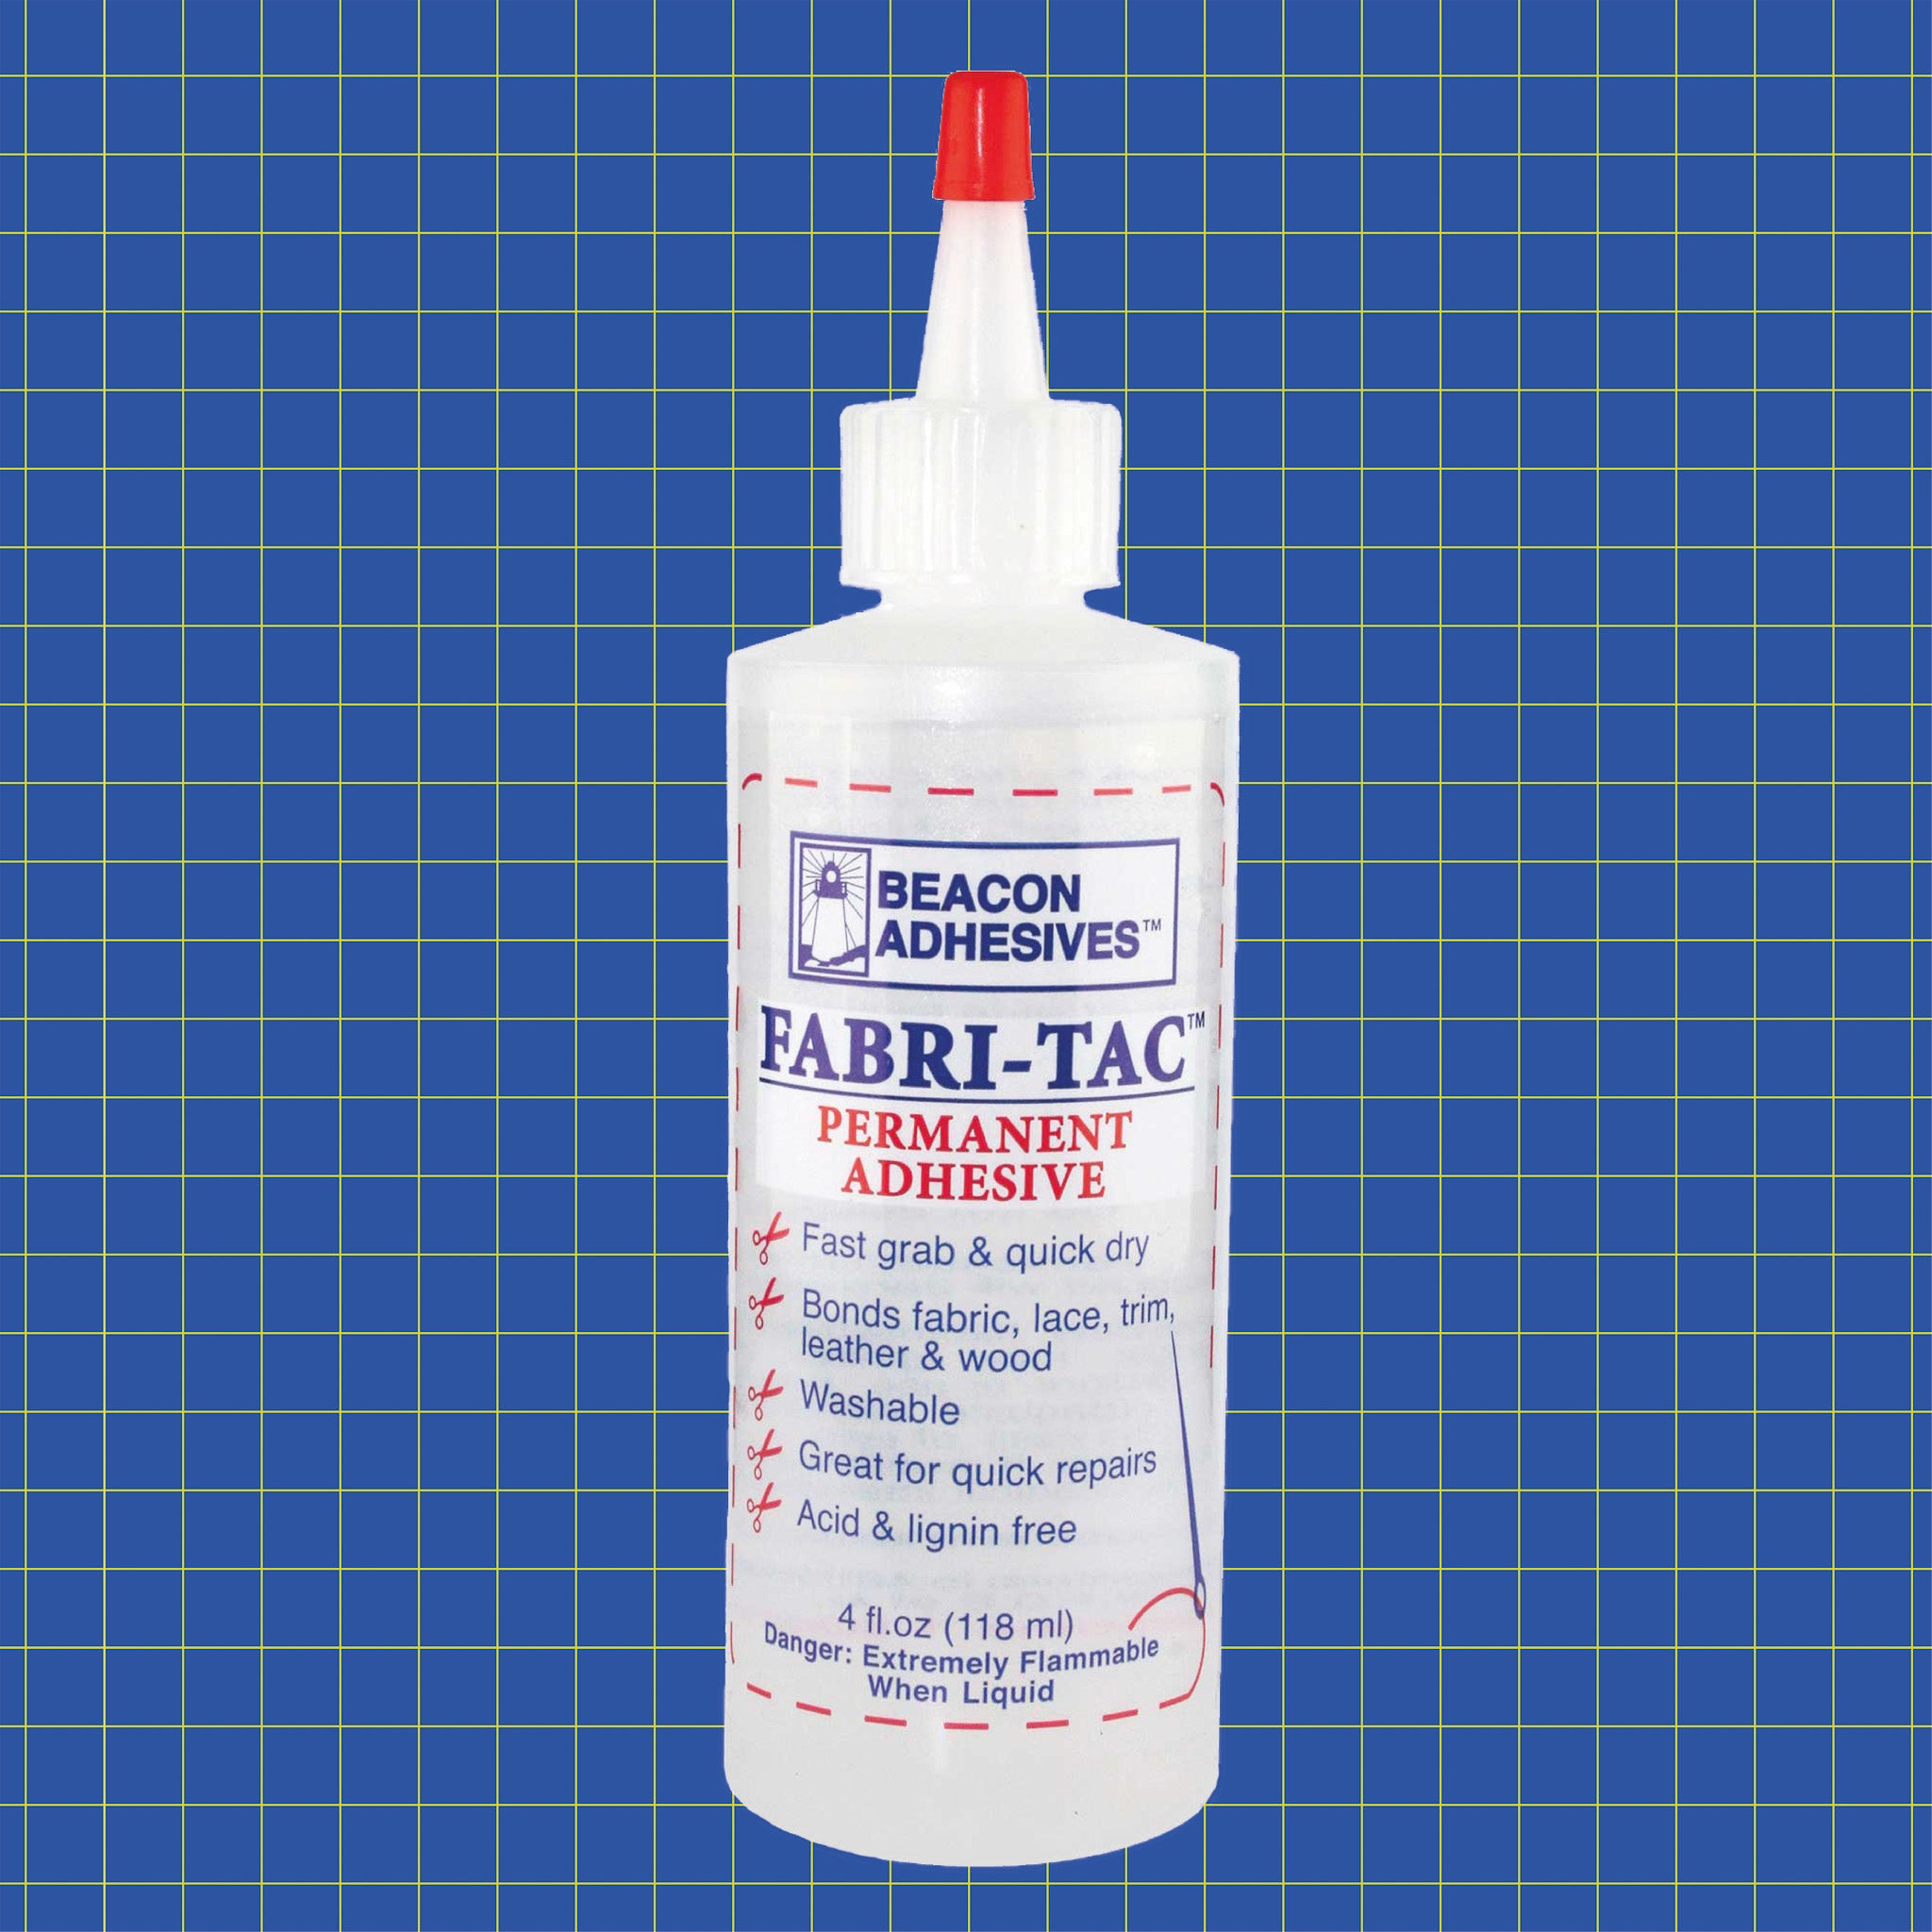 Beacon Fabri-Tac fabric glue bottle on blue grid background